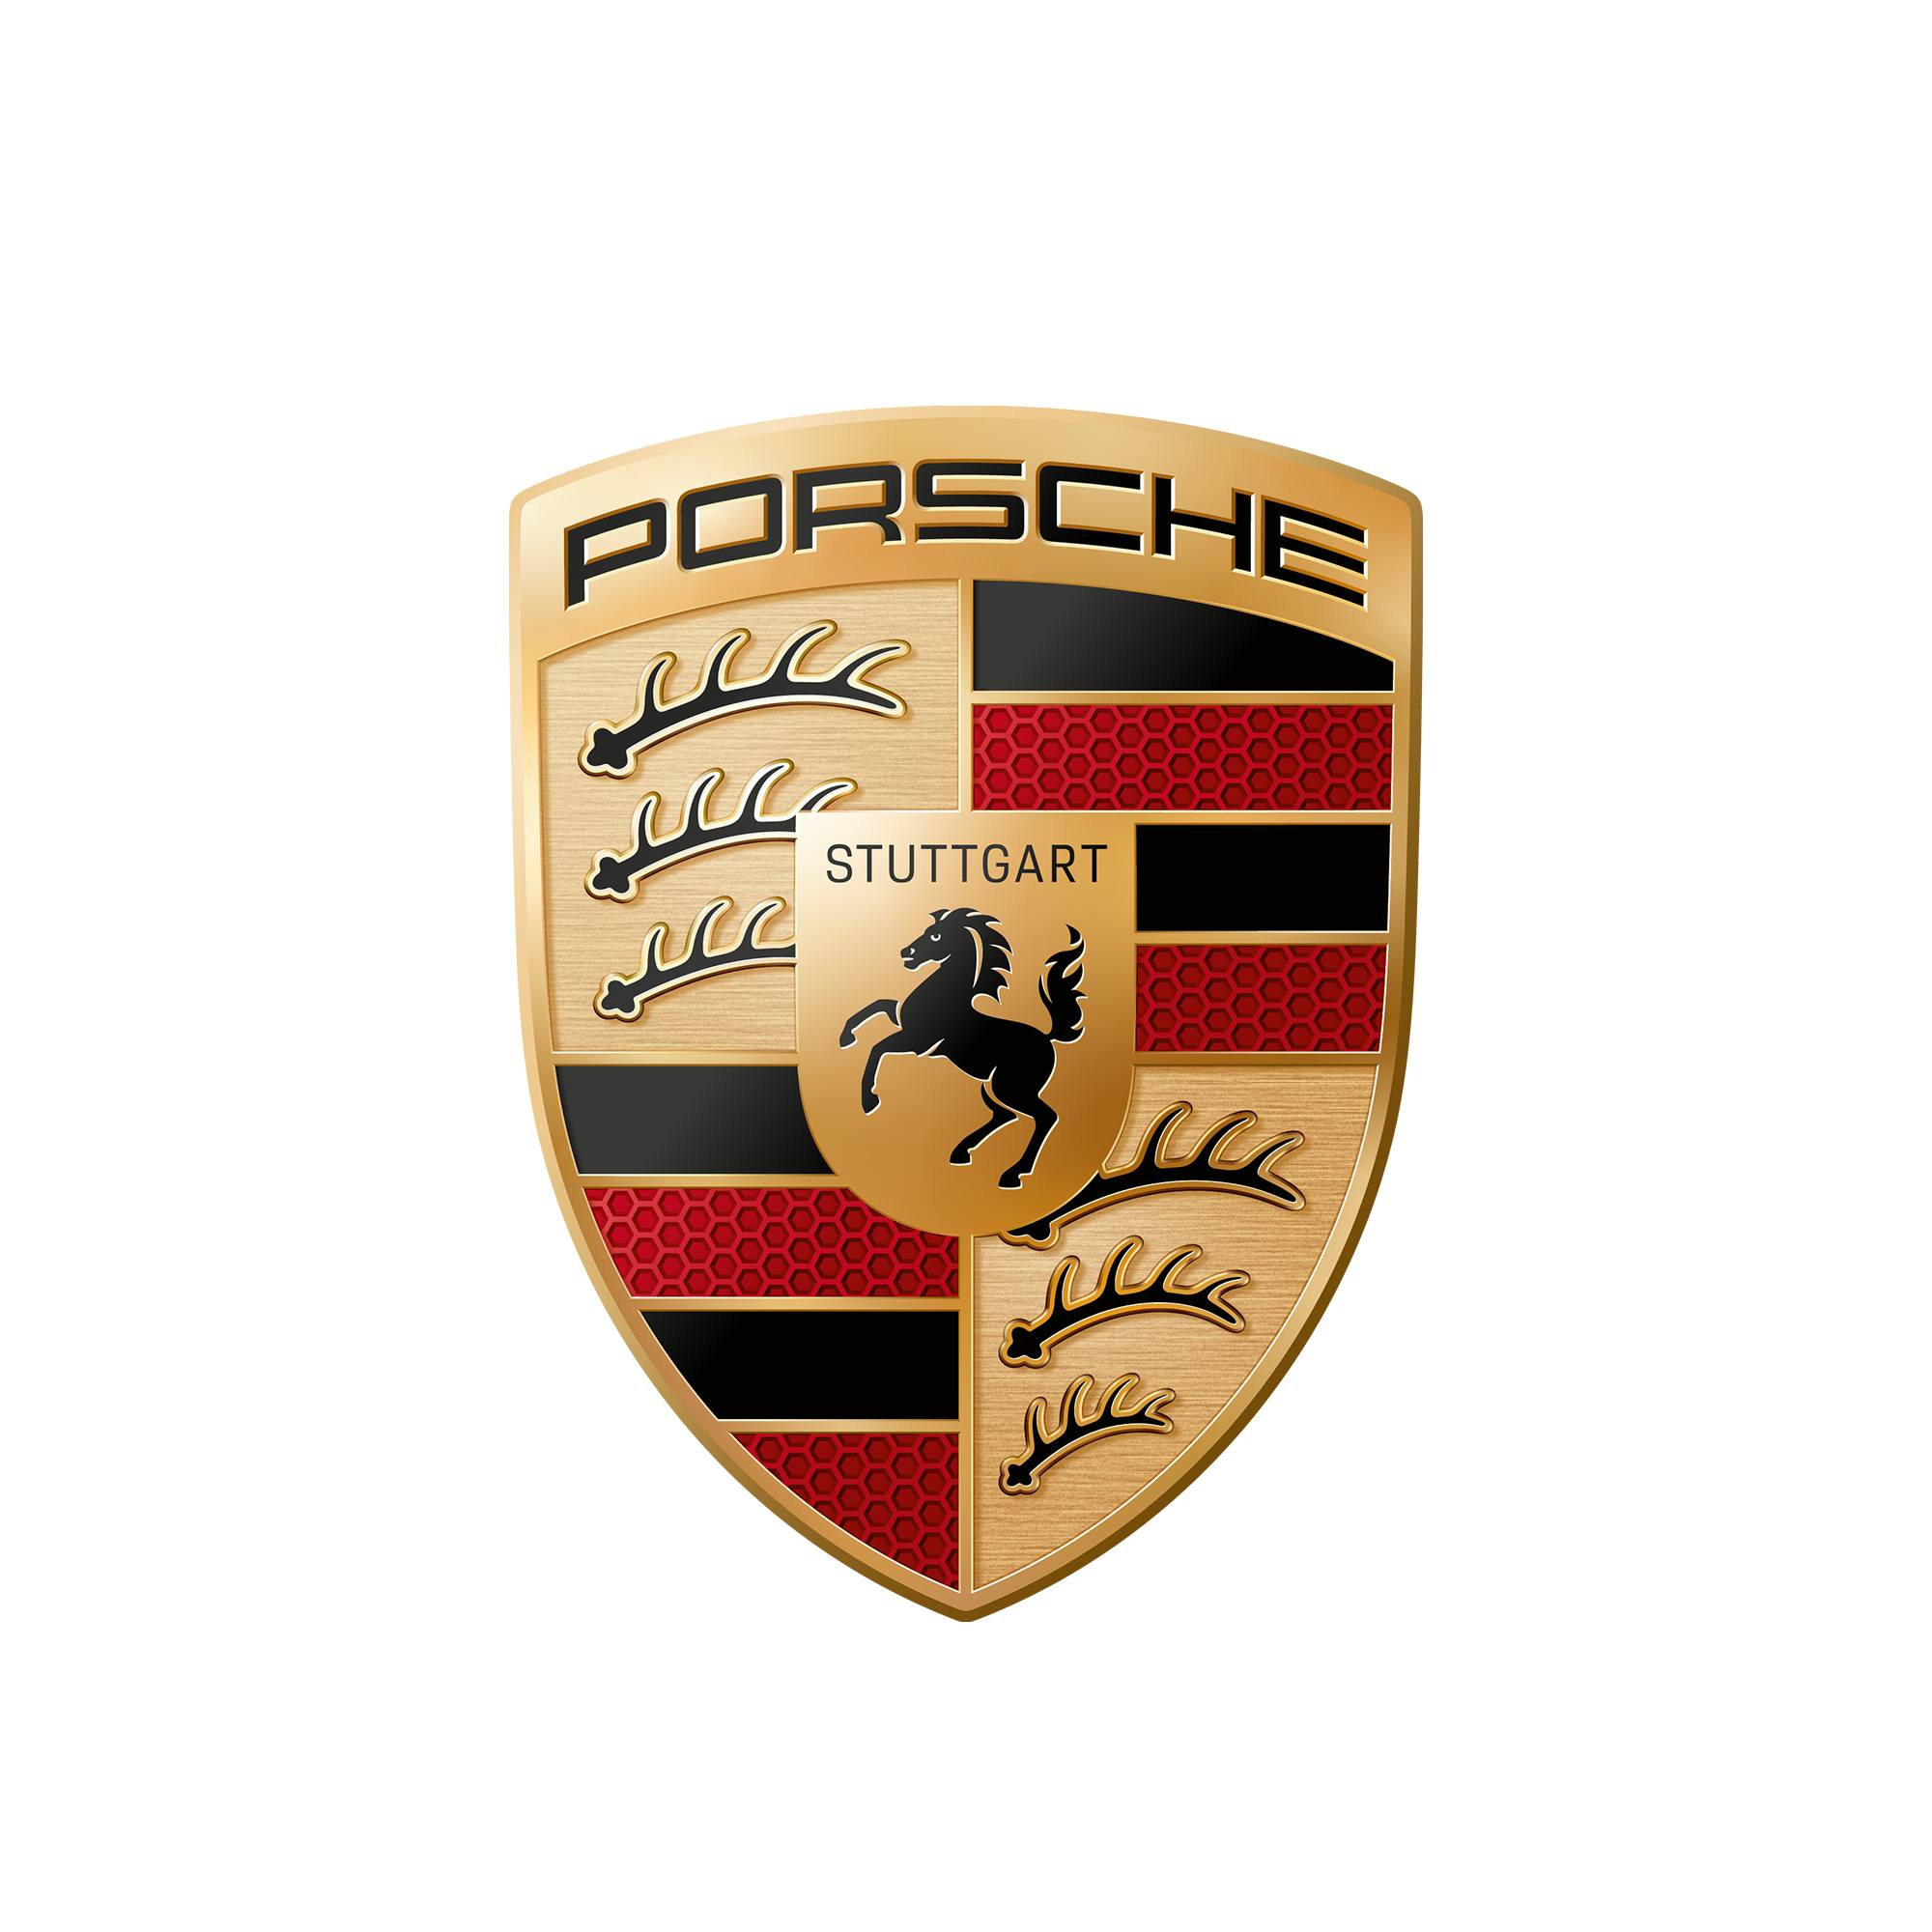 Porsche Cars Cyprus